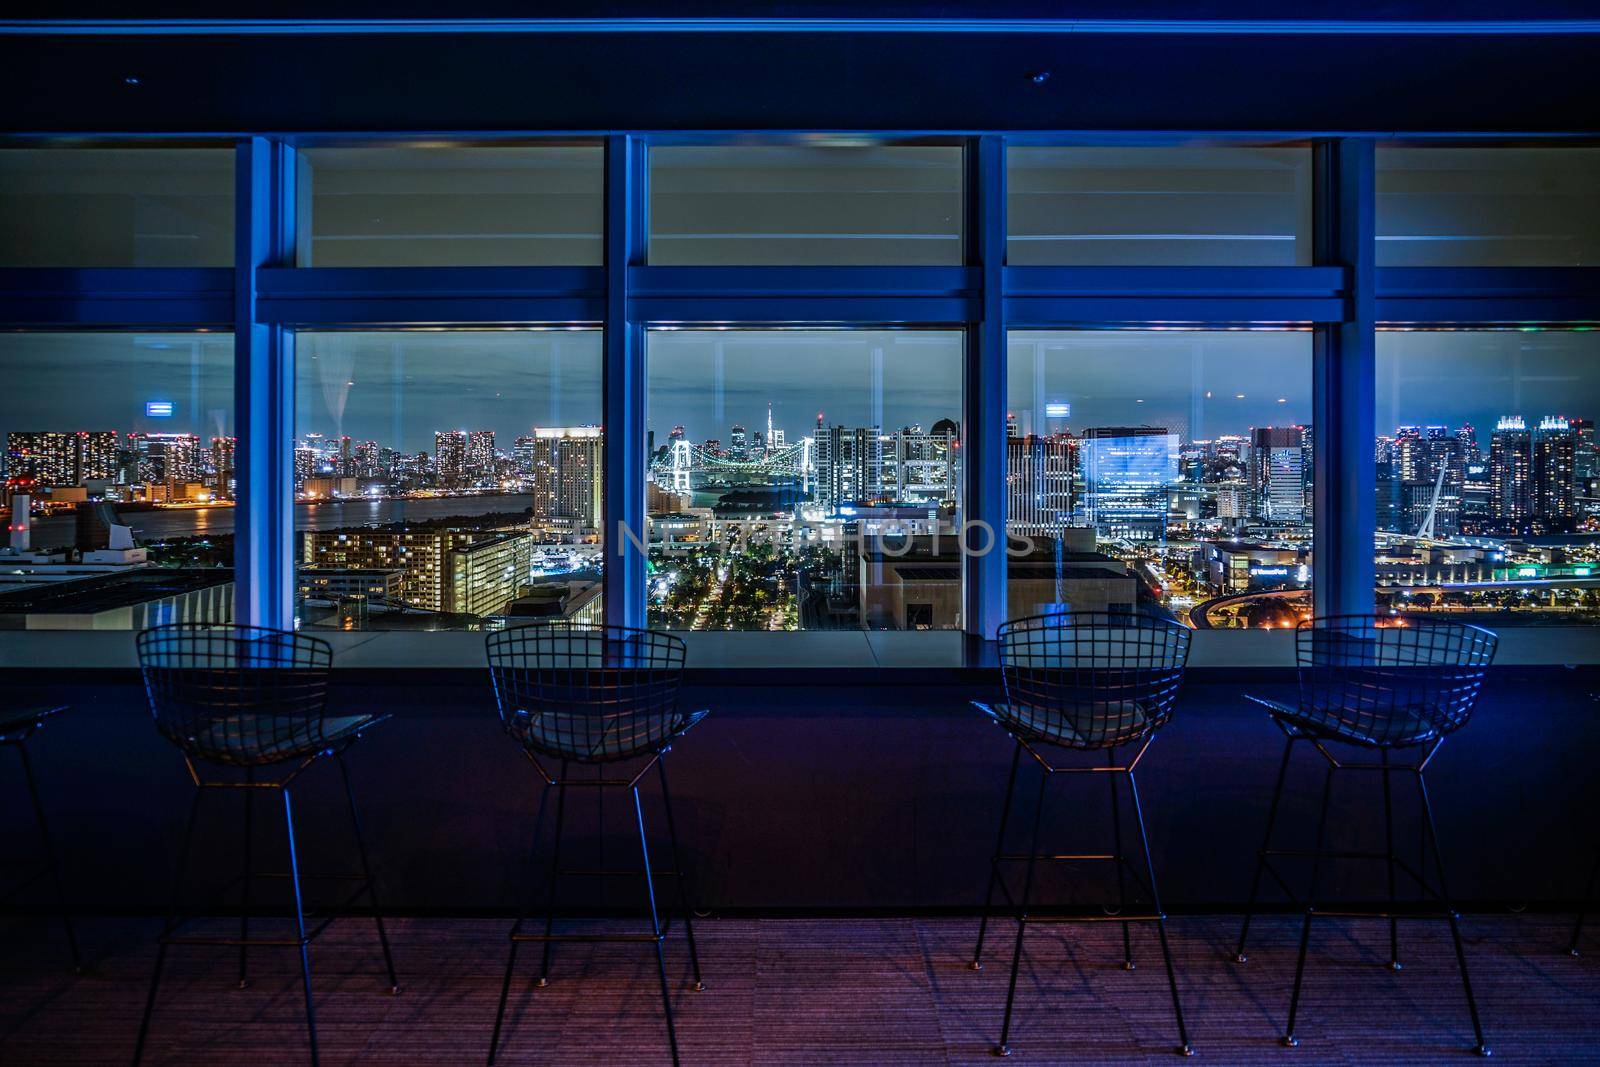 Fashionable night lounge image. Shooting Location: Tokyo metropolitan area